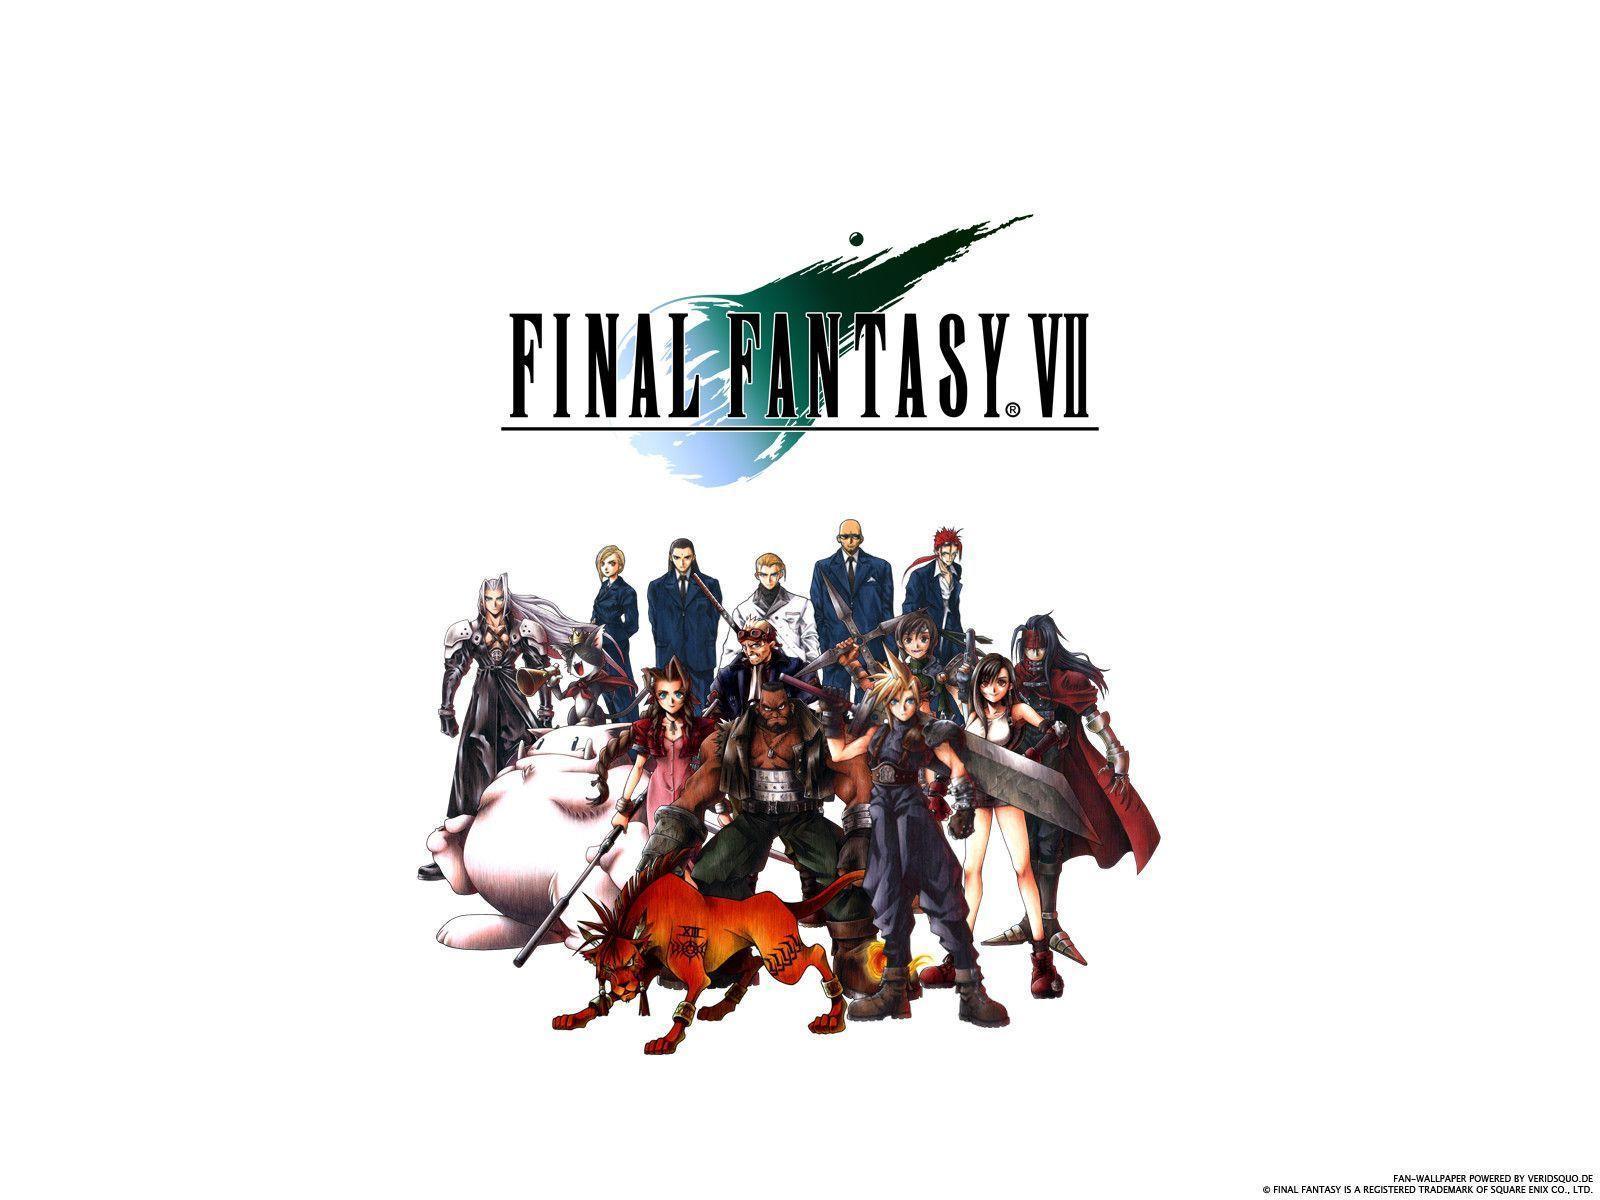 Final Fantasy VII. All things Final Fantasy